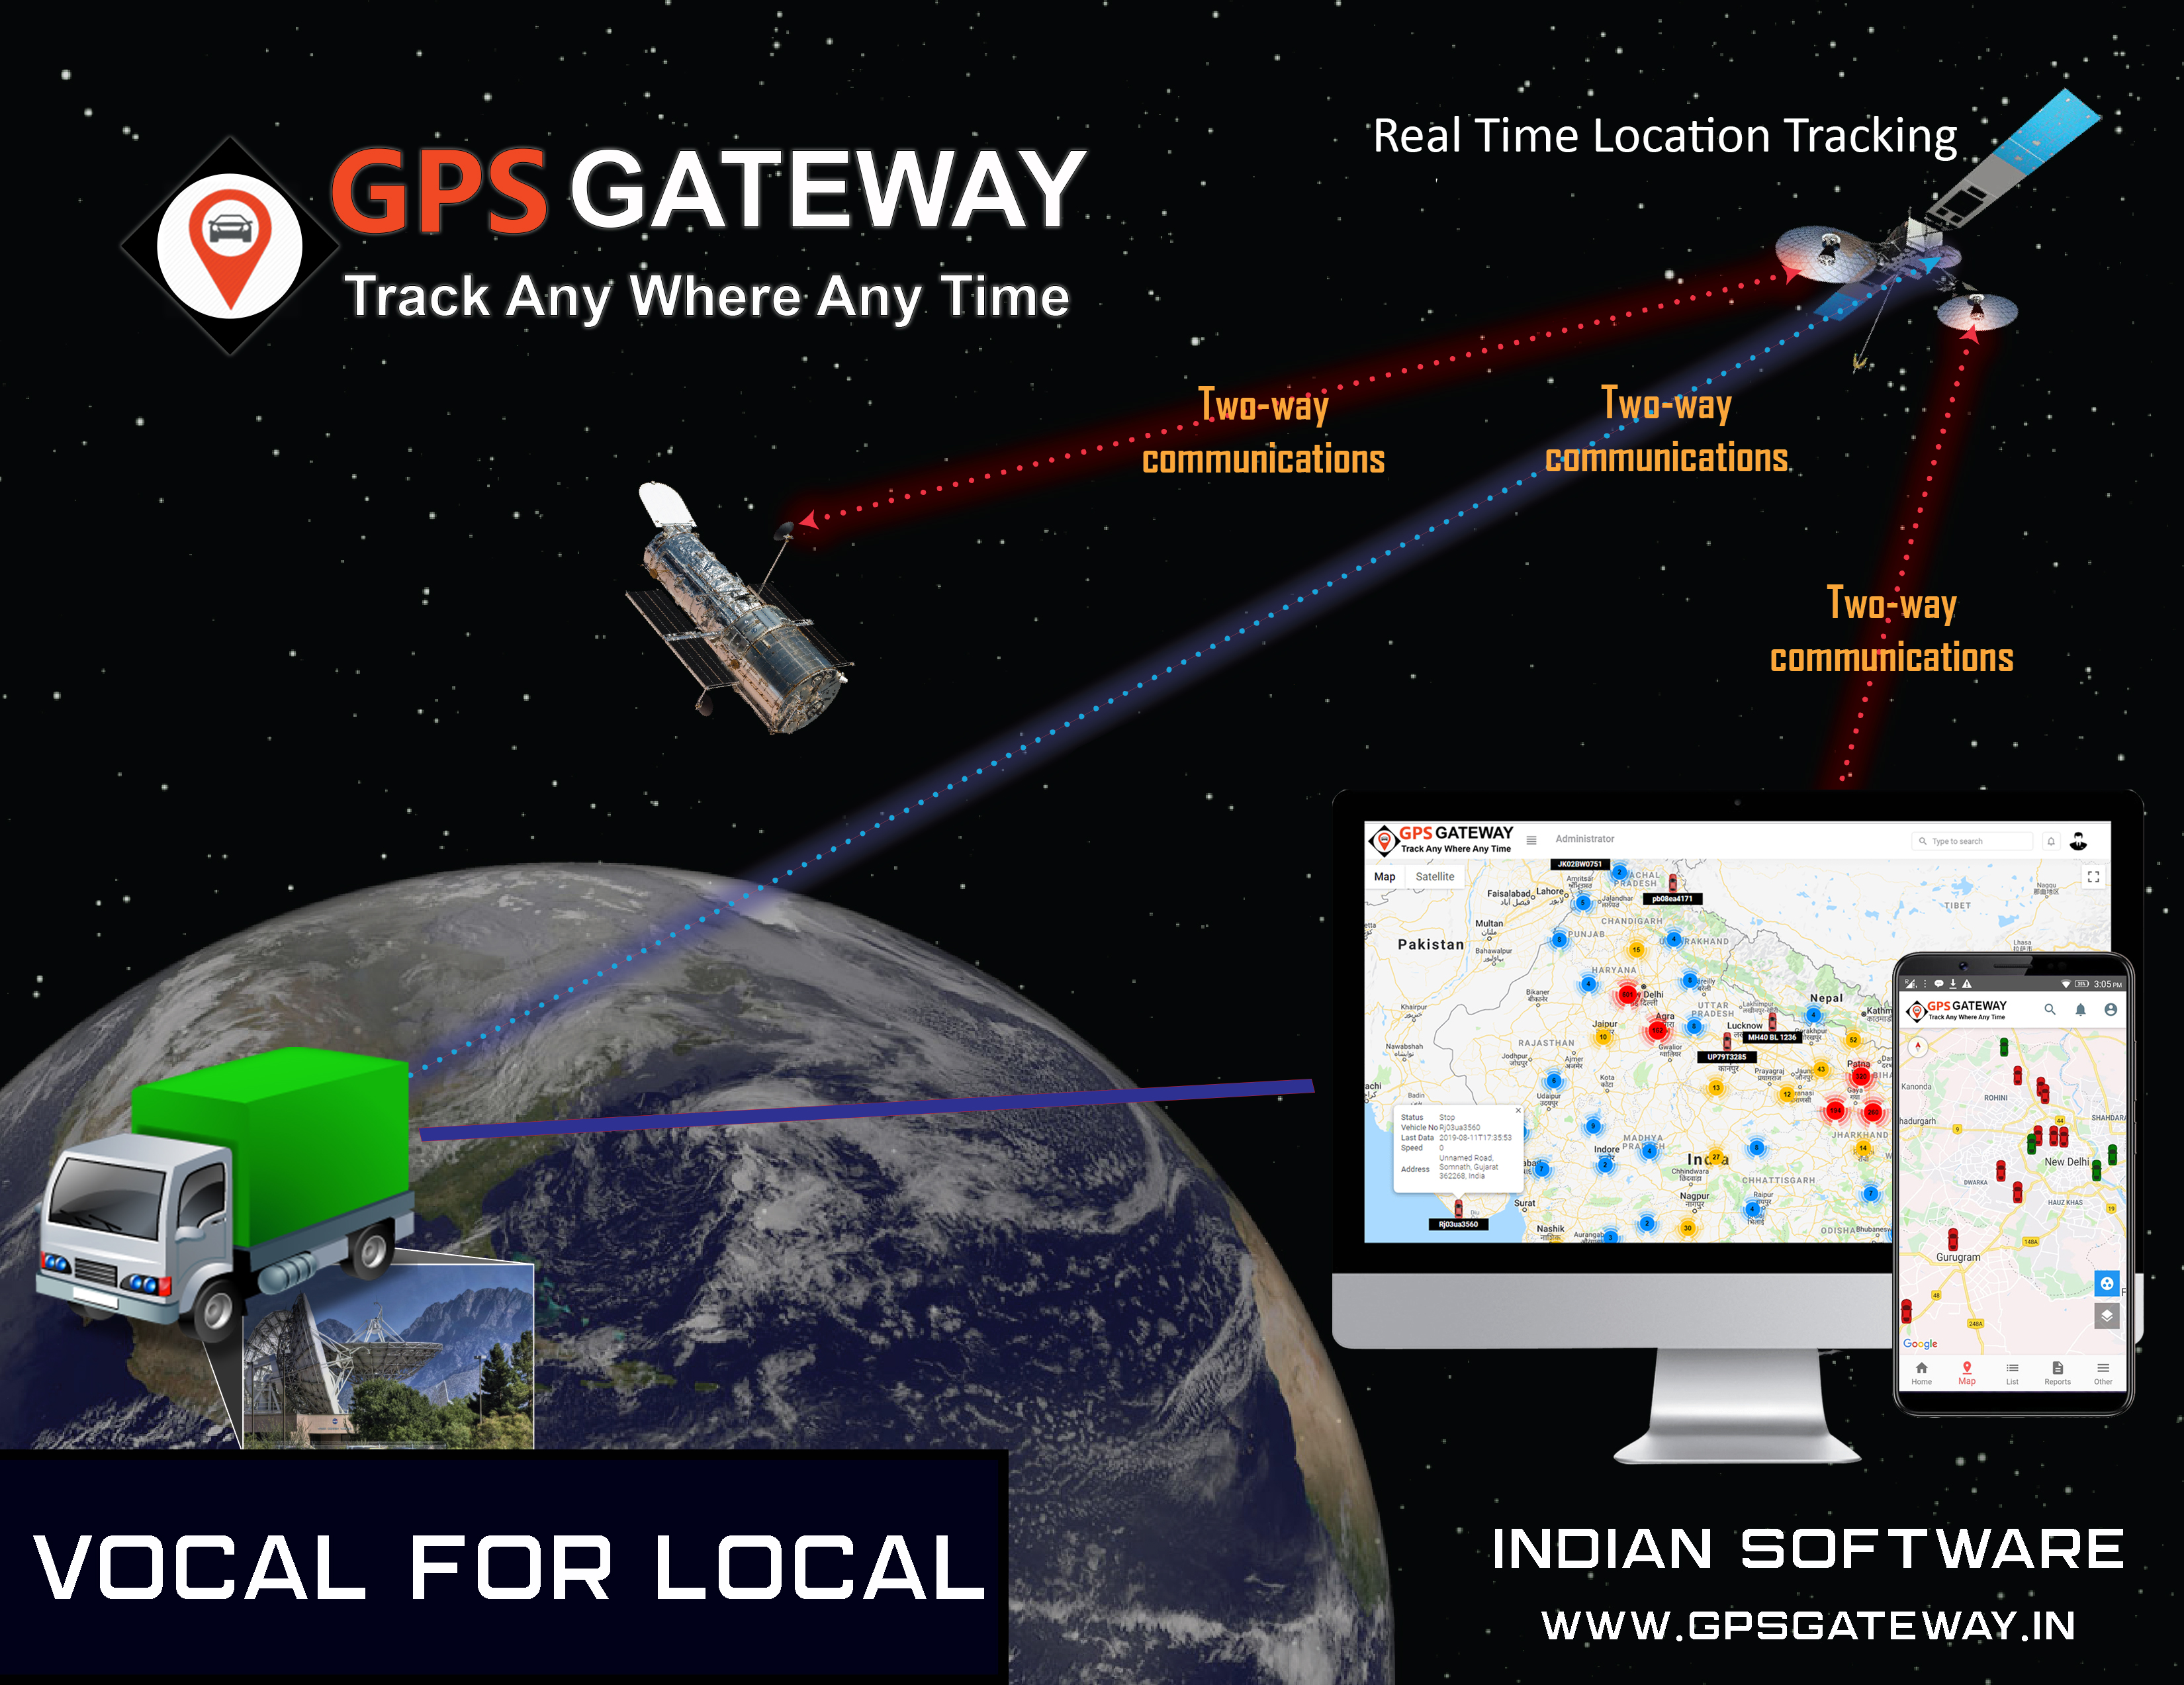 GPS Gateway display images